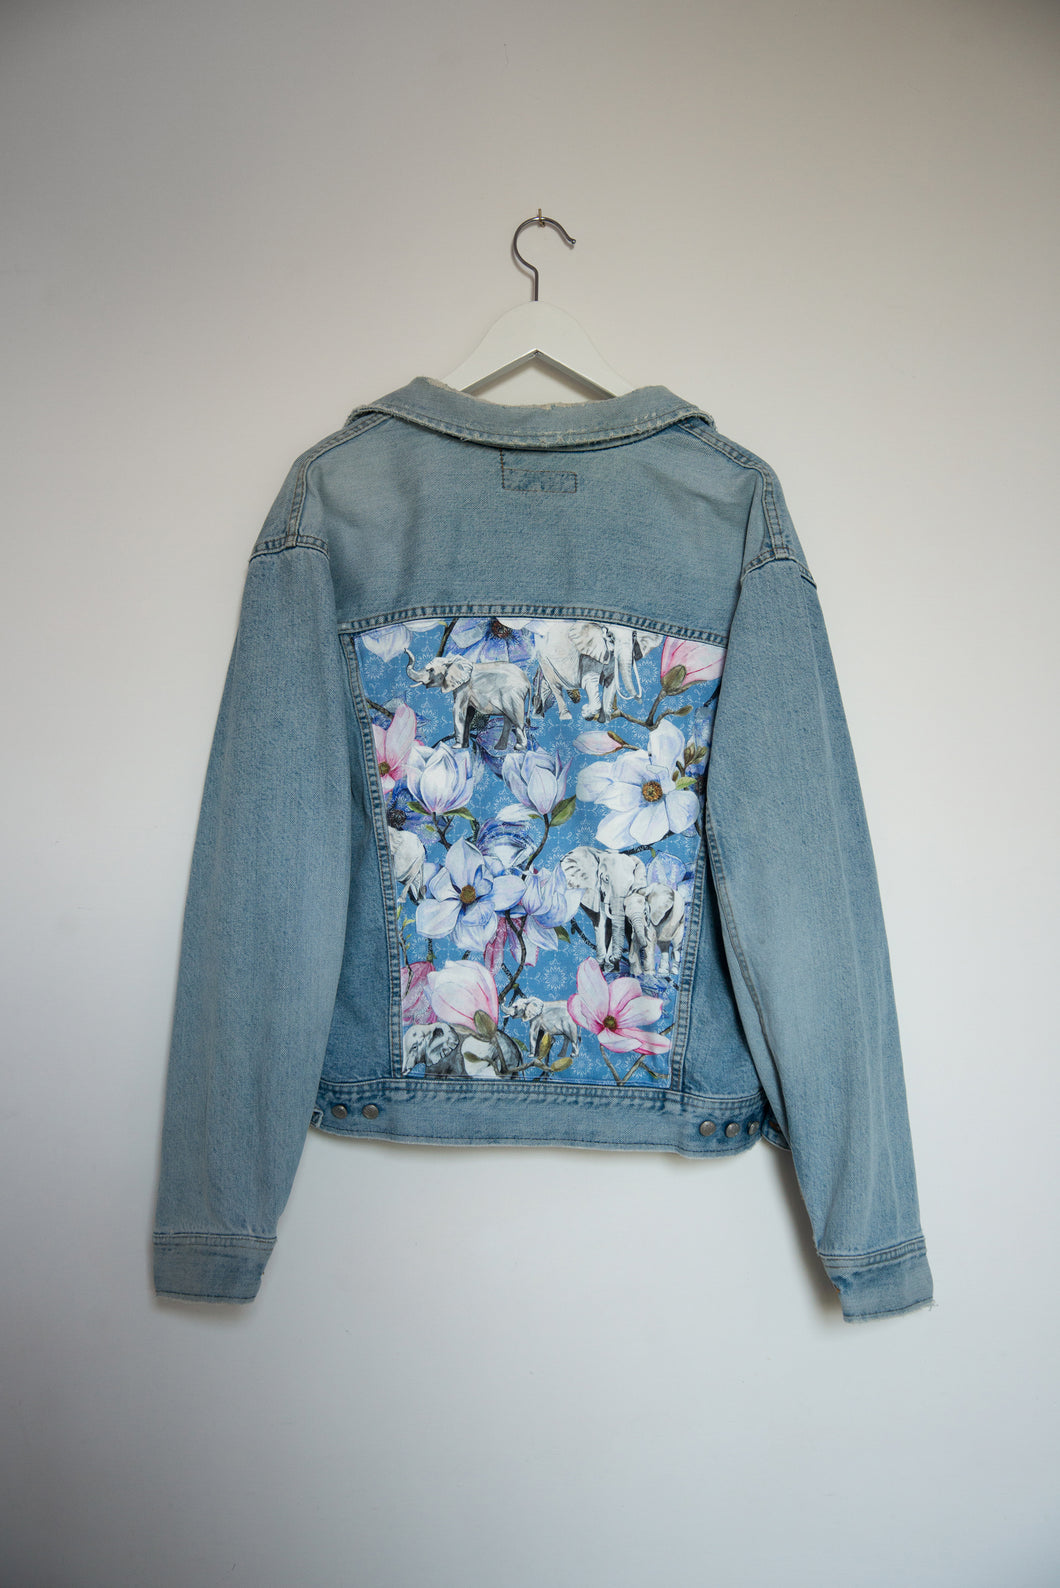 'Replay' Denim jacket, Blue Magnolia elephant design